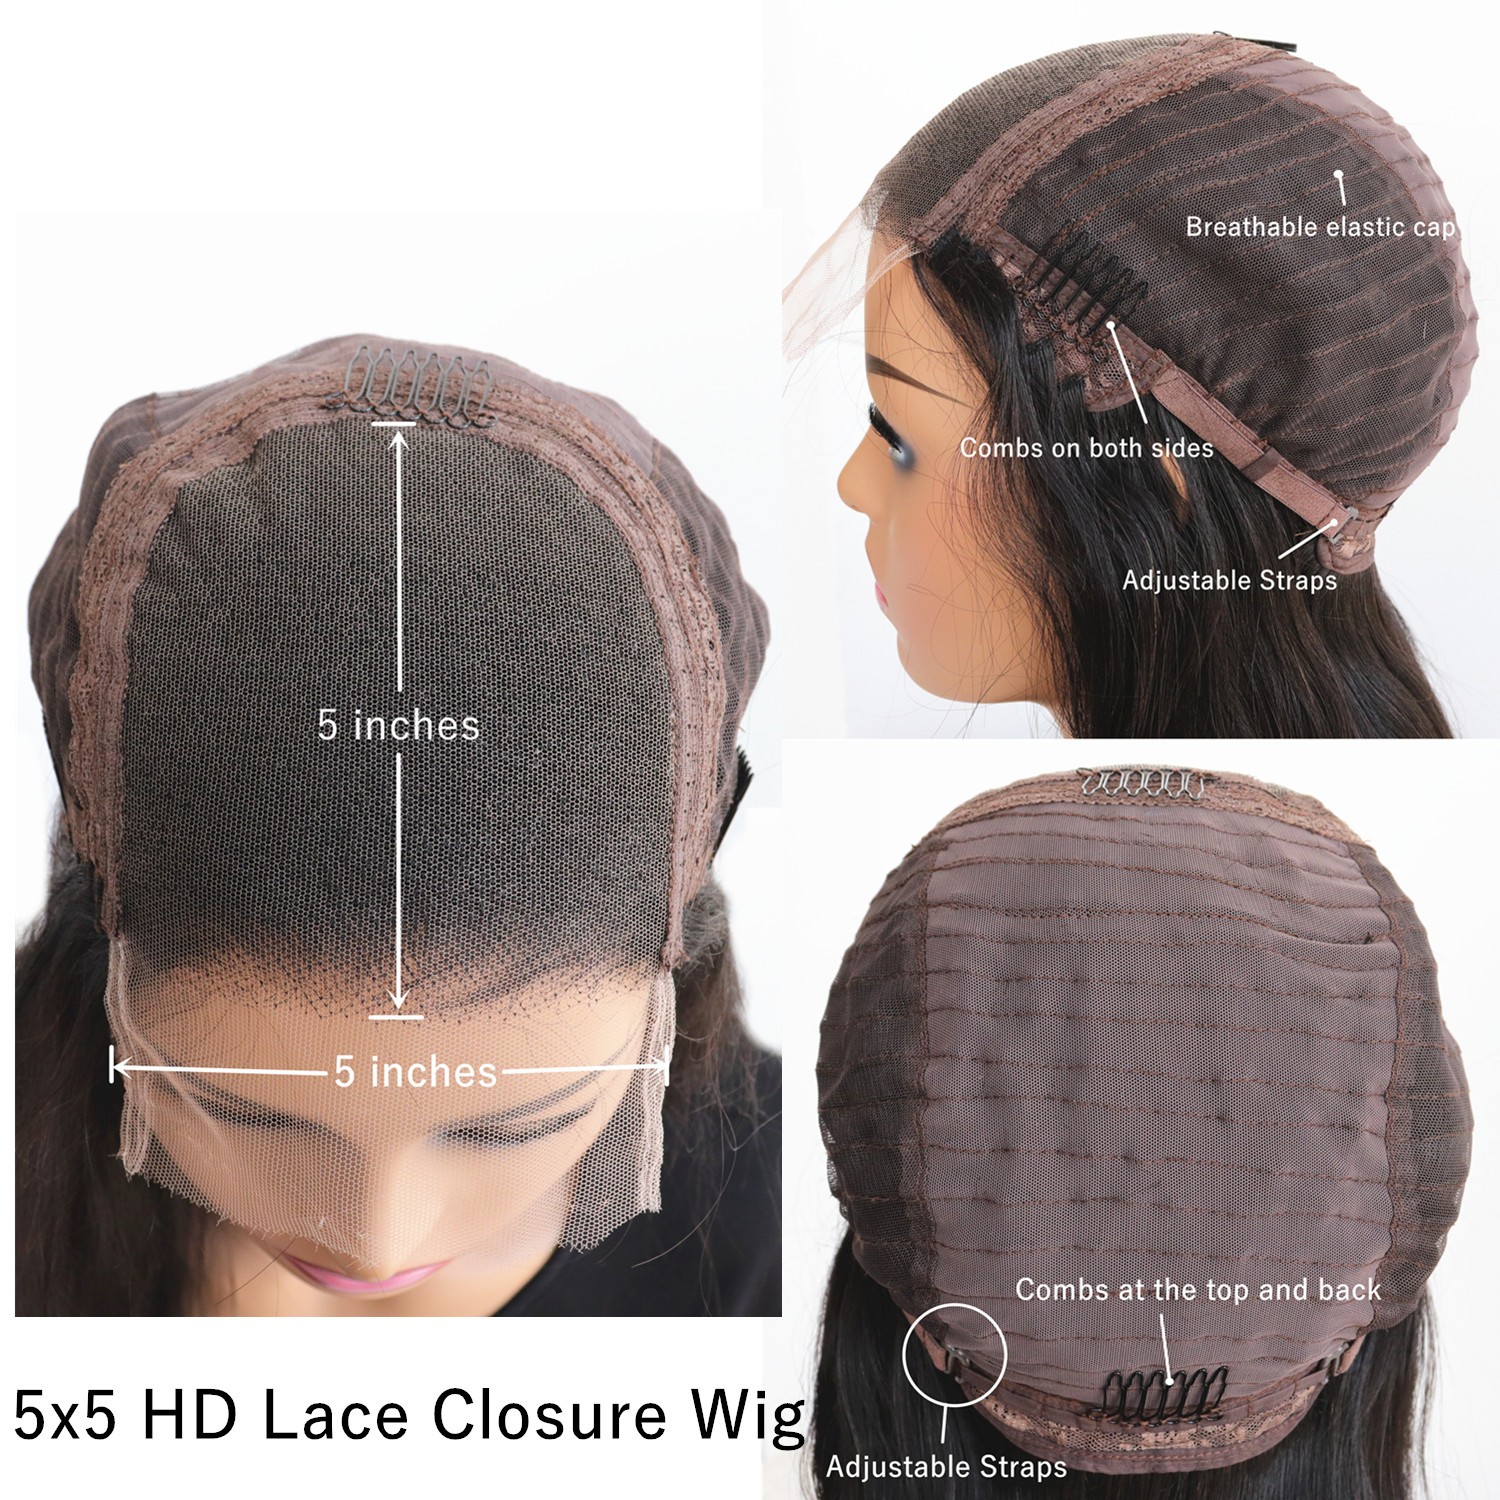 5x5 hd lace closure wig